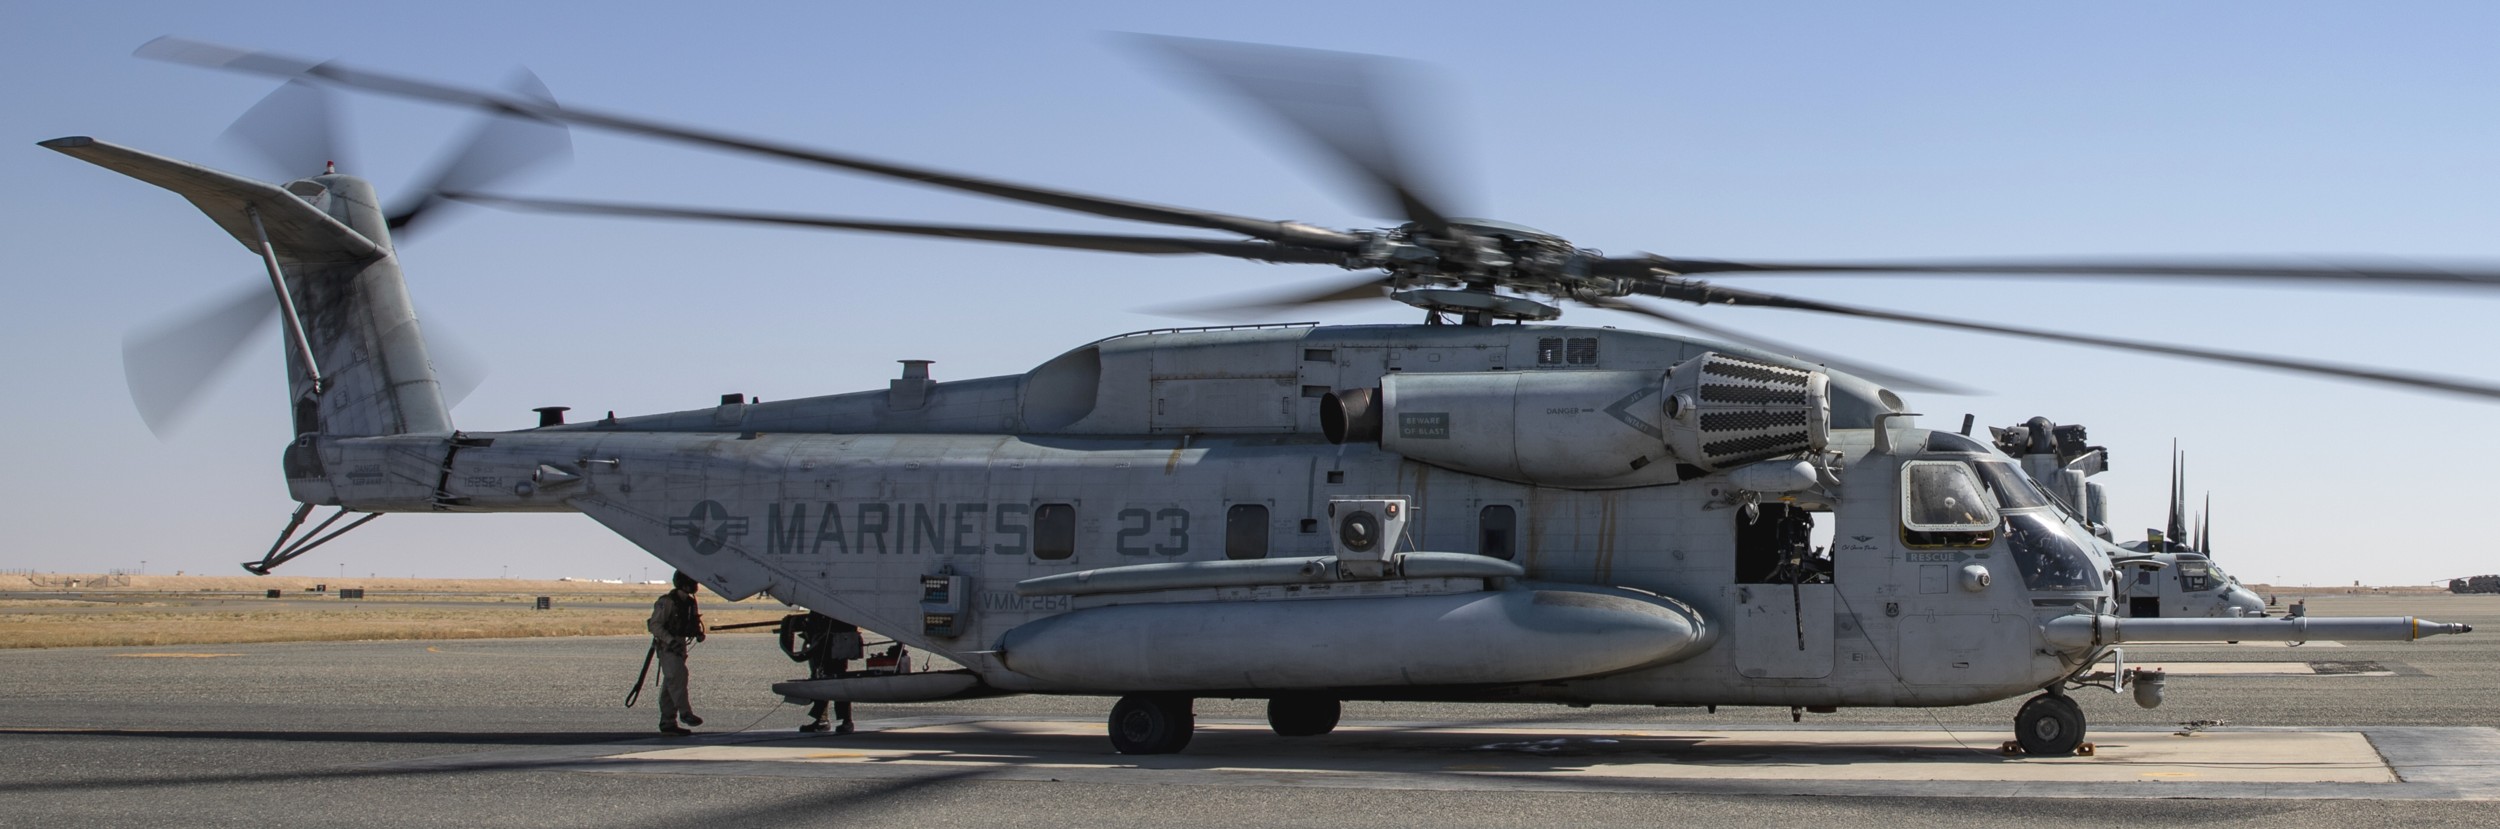 hmh-366 hammerheads ch-53e super stallion marine heavy helicopter squadron usmc afghanistan 148